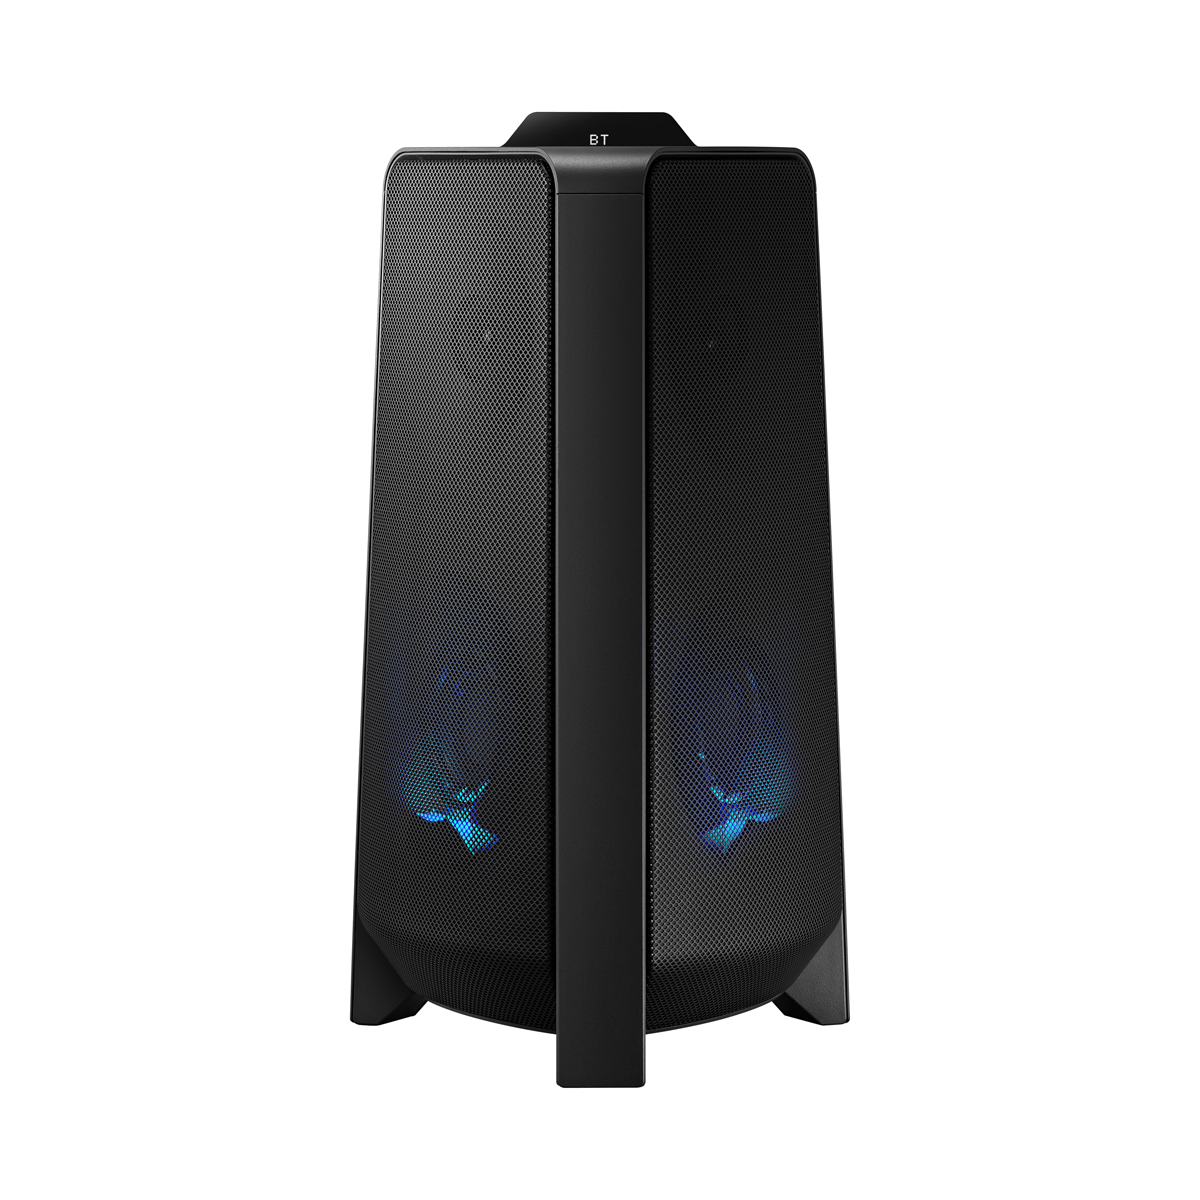 Torre Sonido Samsung Mx-T50/Zl Bidireccional Negro - Mercados Colsubsidio